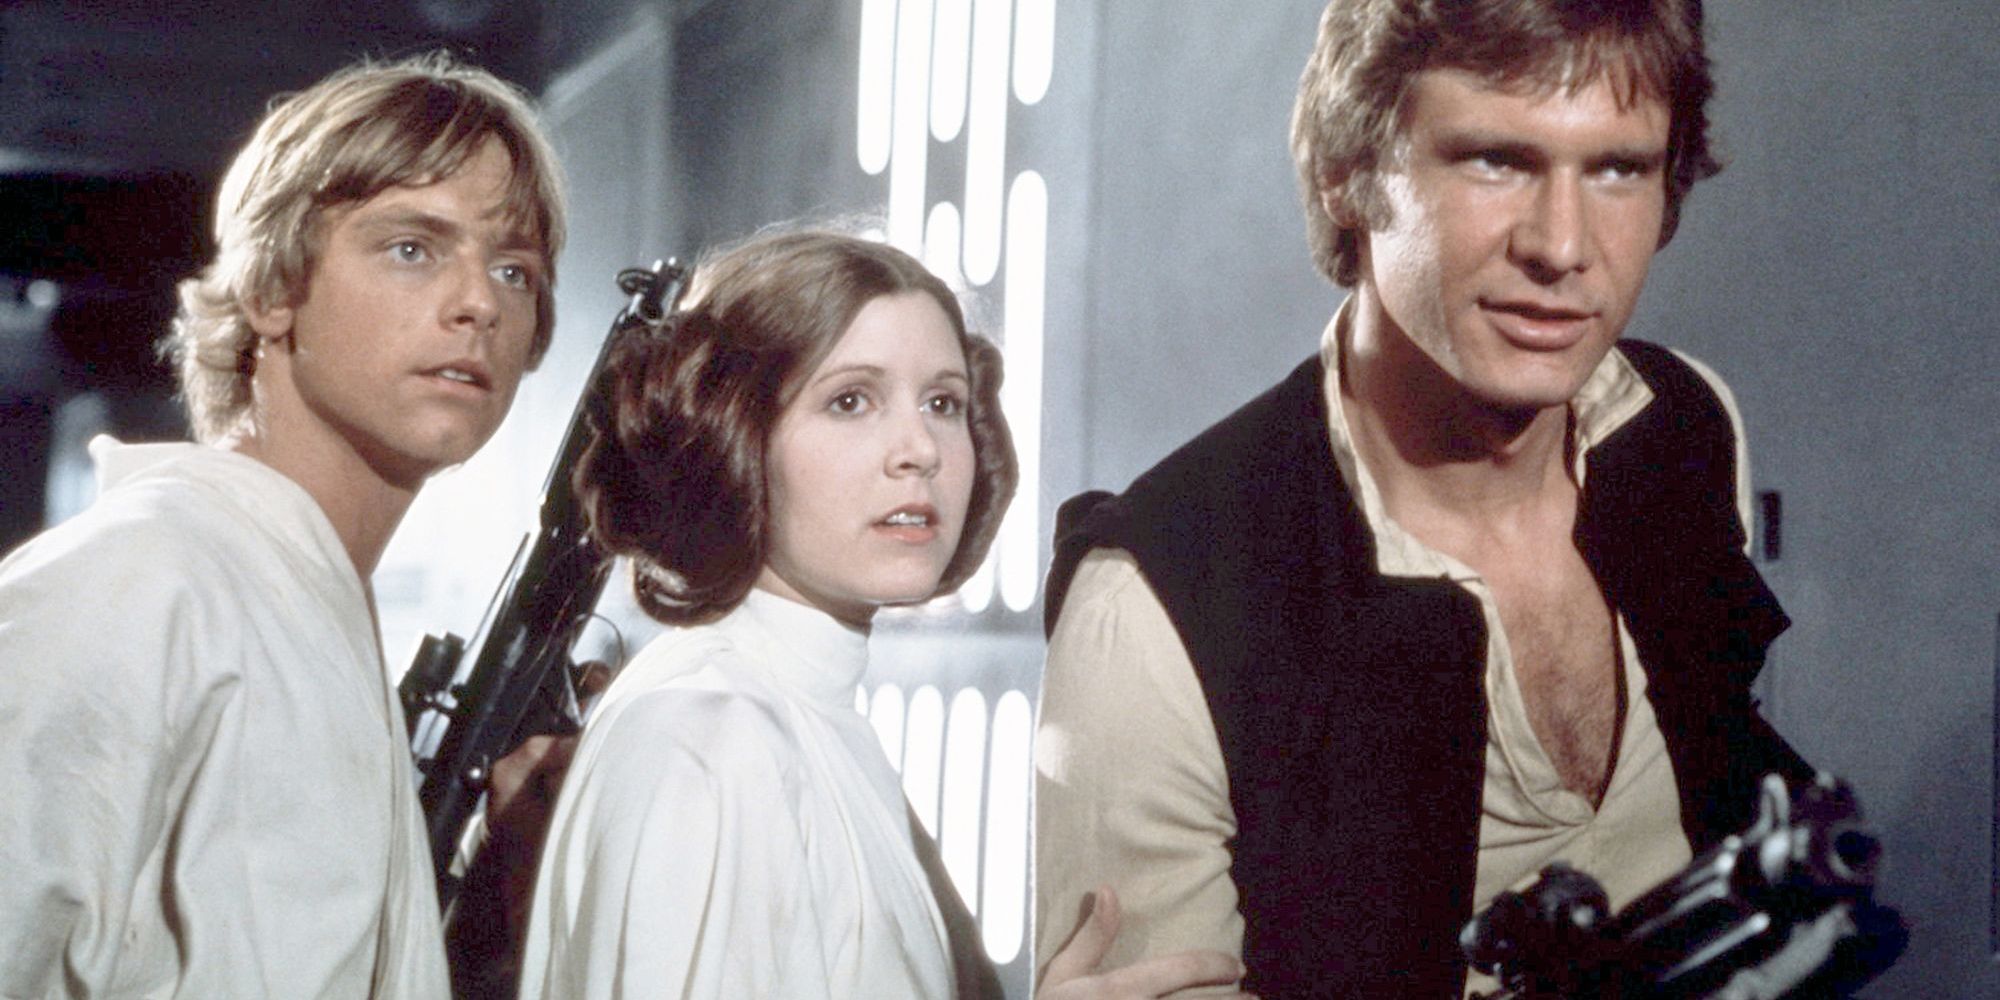 Luke-Skywalker-Leia-Organa-Han-Solo-Star-Wars-Episode-IV-A-New-Hope